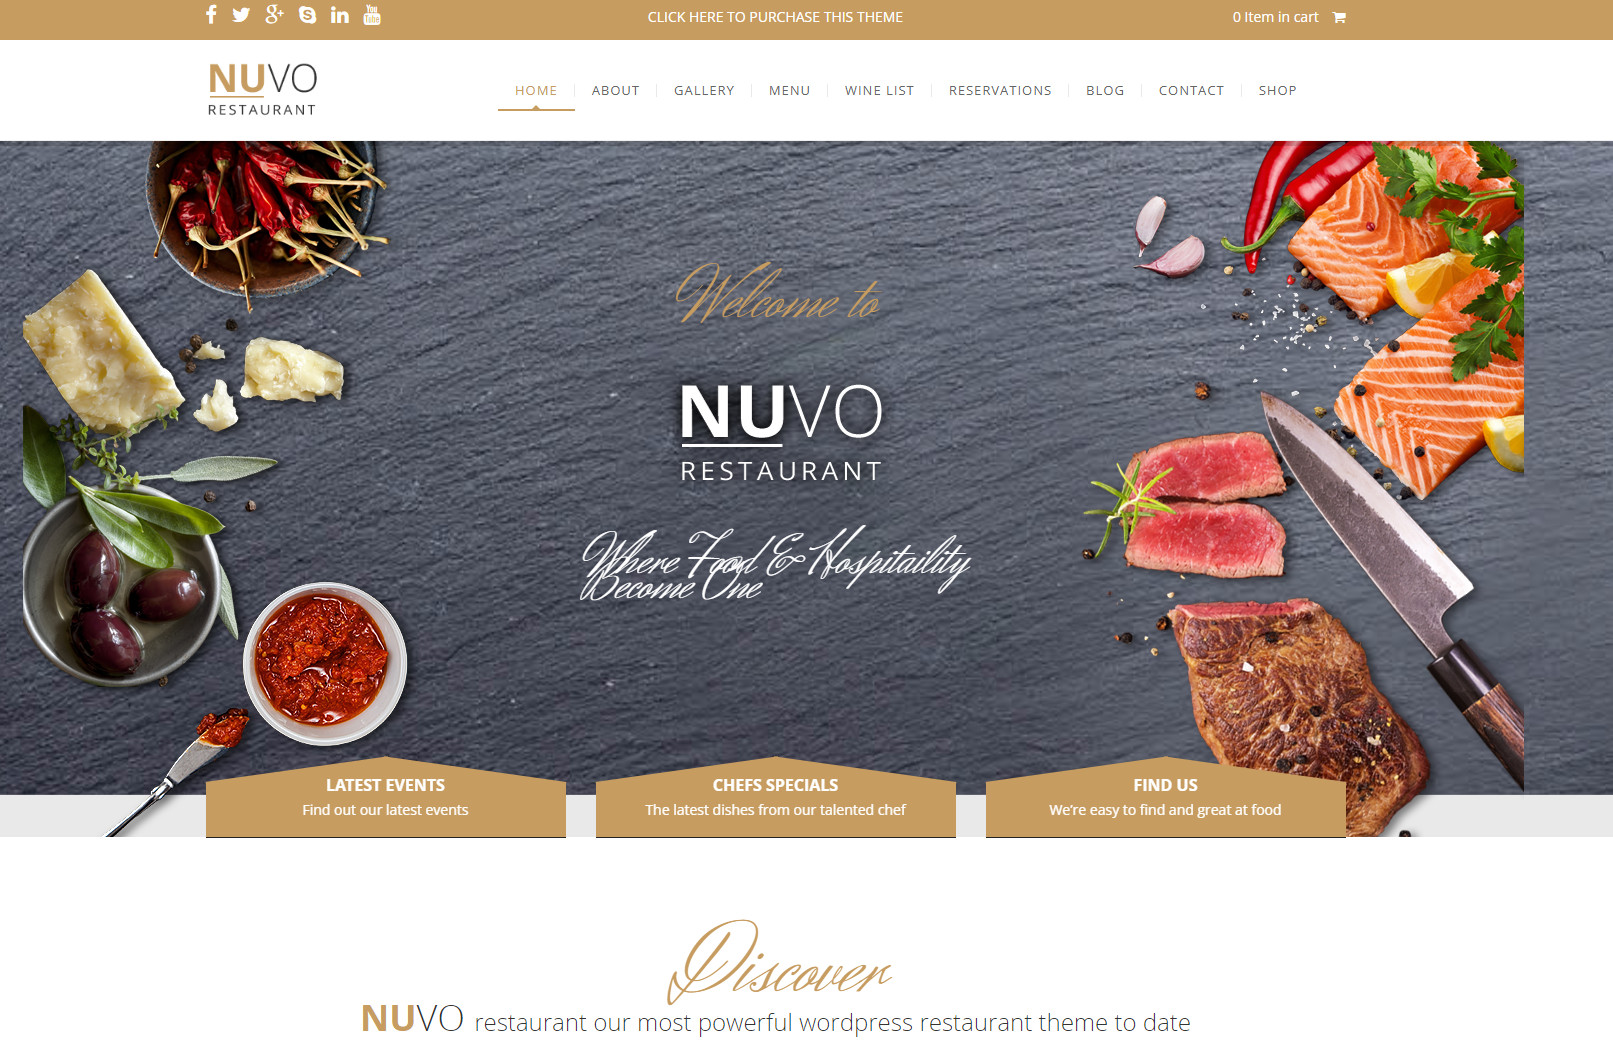 An example of the NUVO wordpress theme